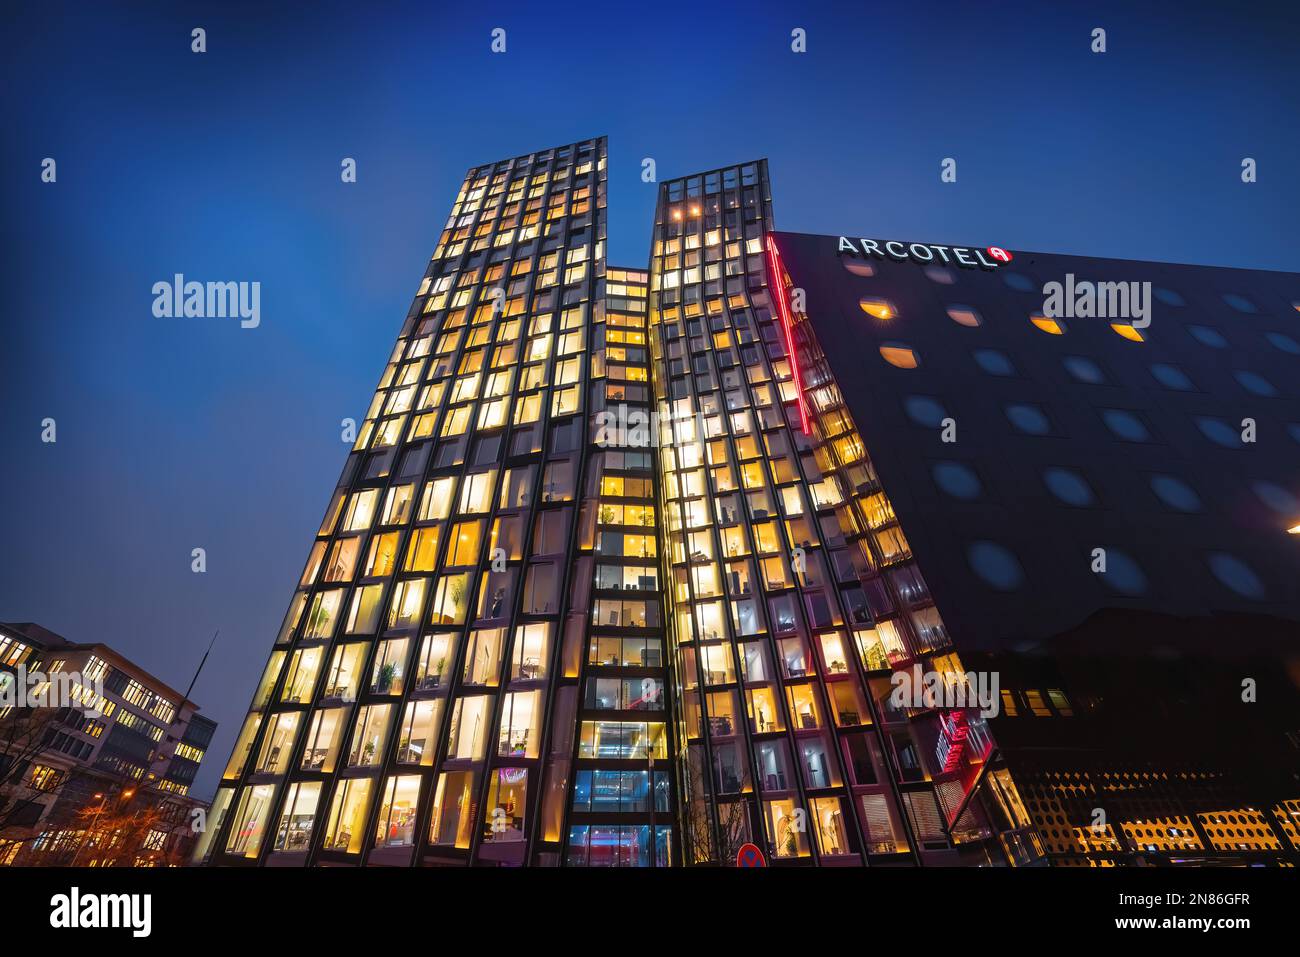 Dancing Towers and Arcotel at St. Pauli District at night - Hamburg, Germany Stock Photo